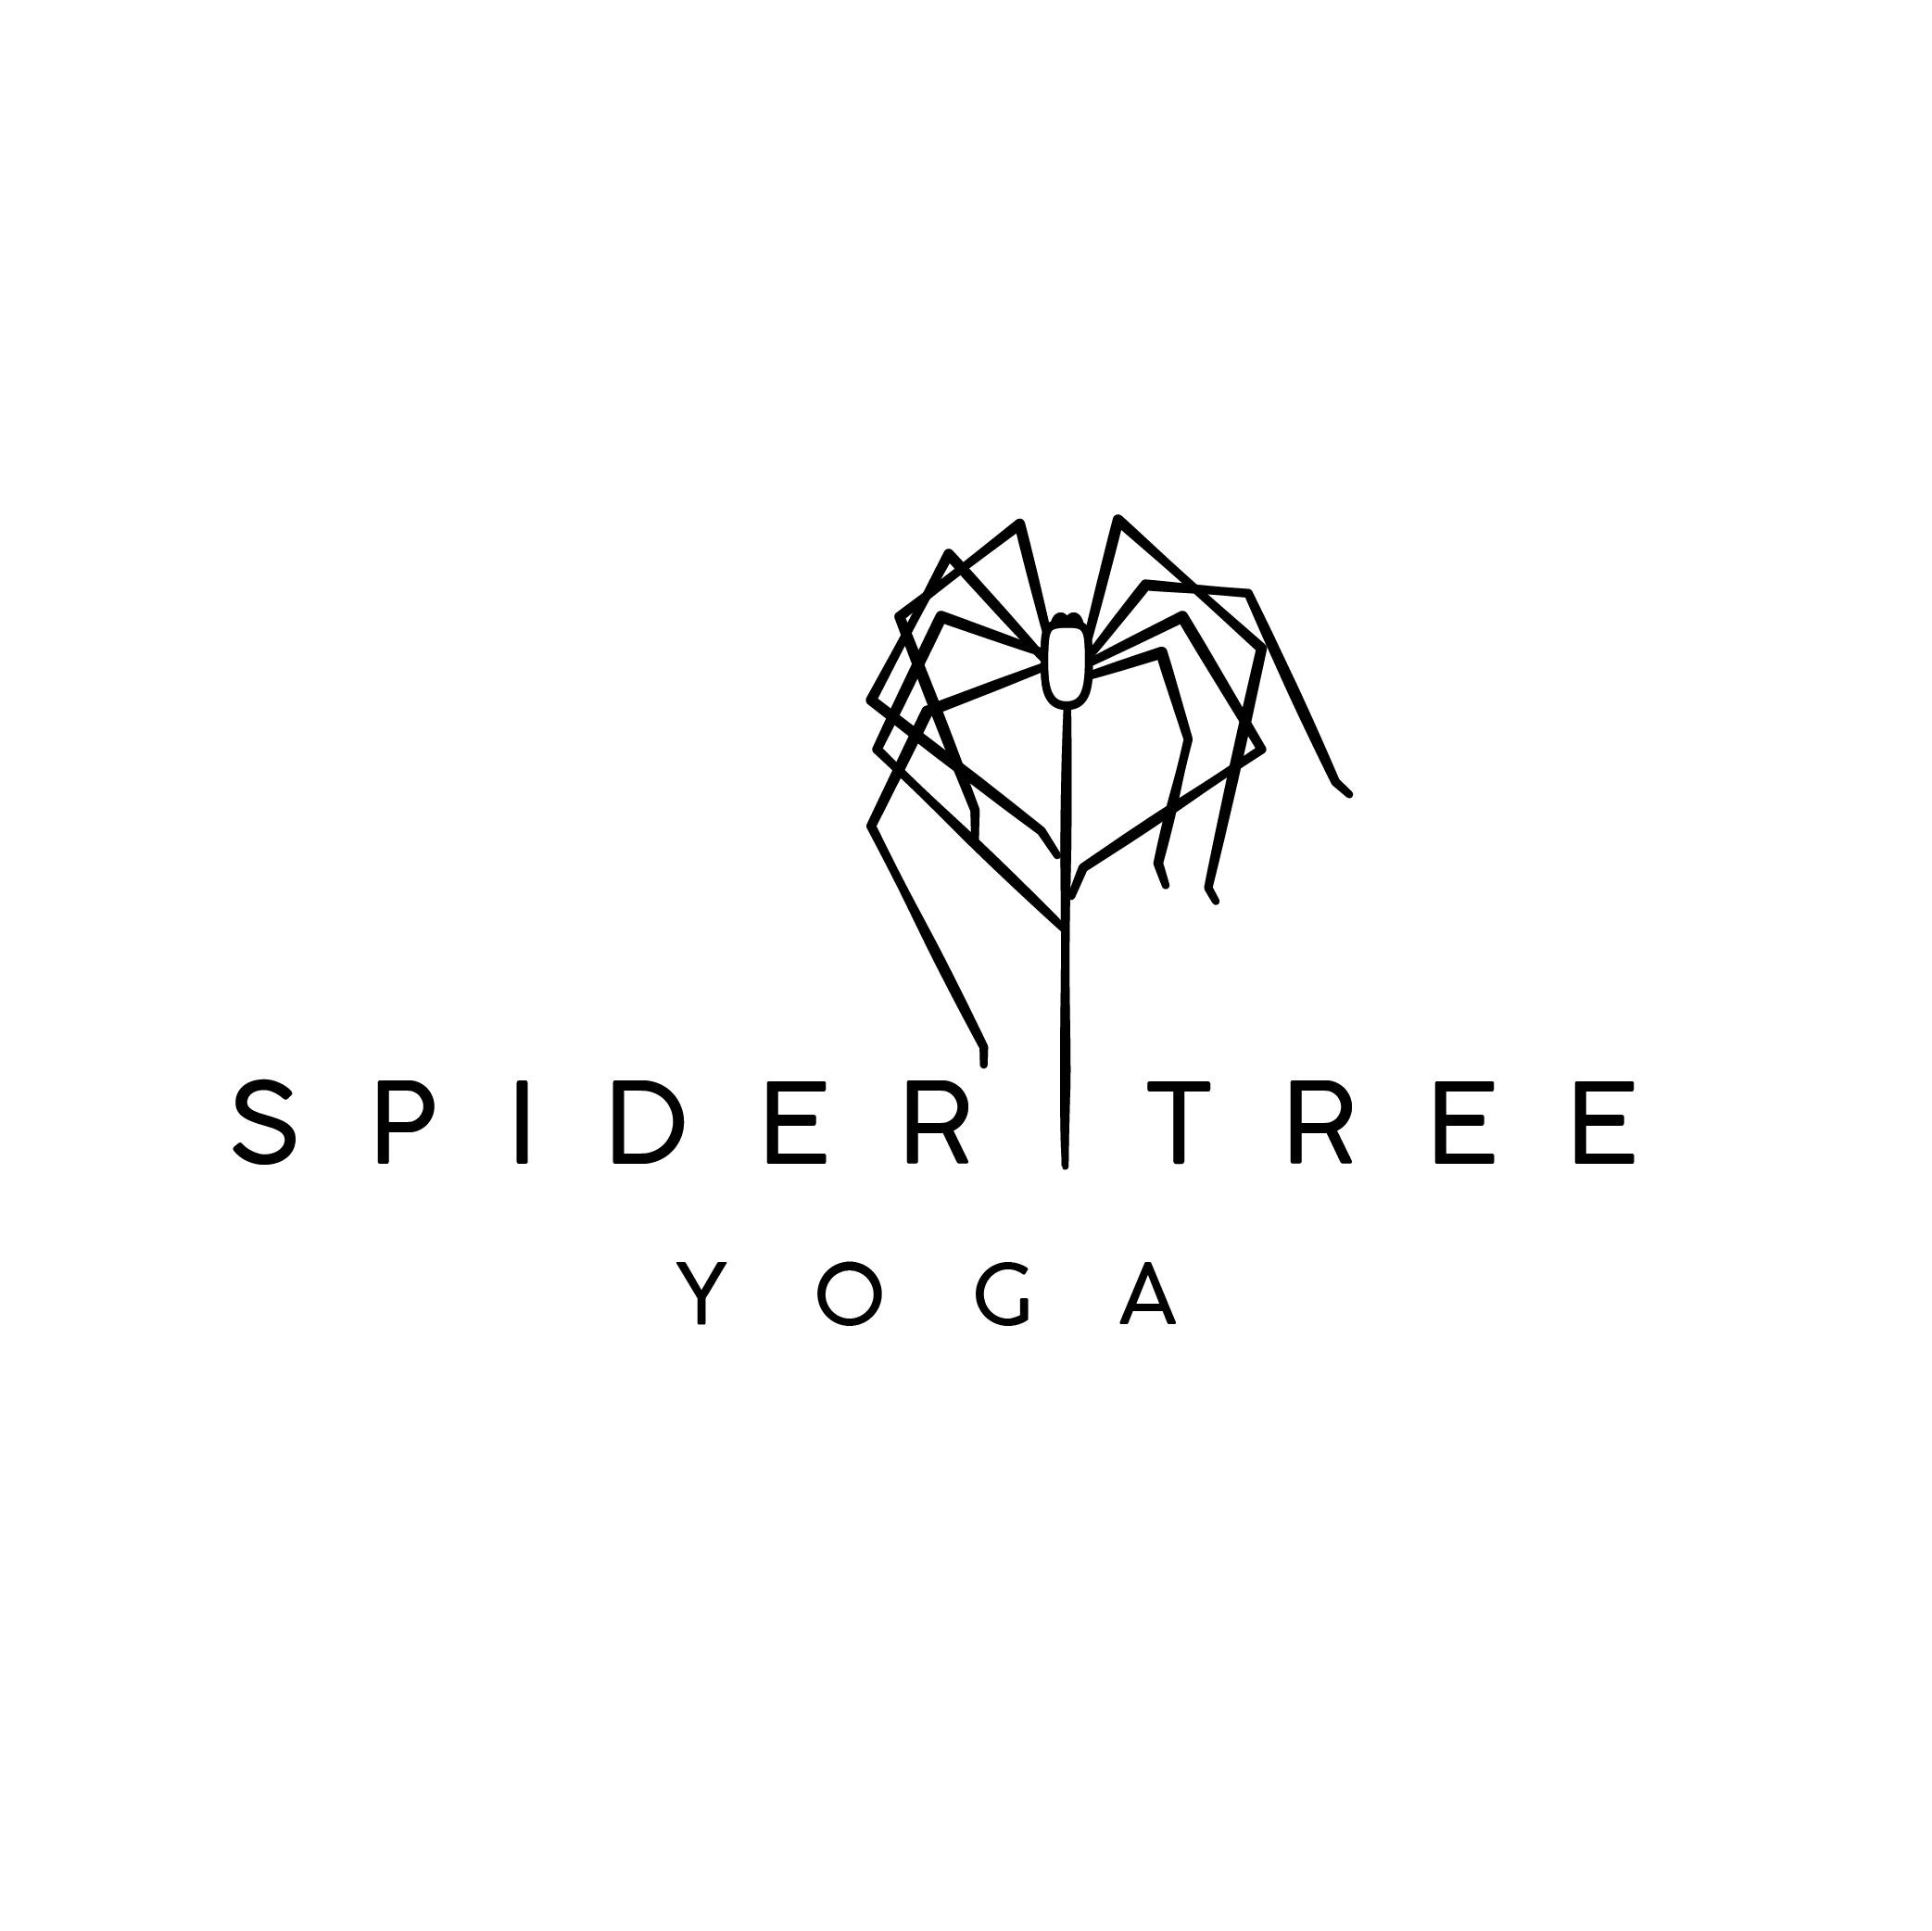 steven cote graphic design logo branding visual communication spider tree